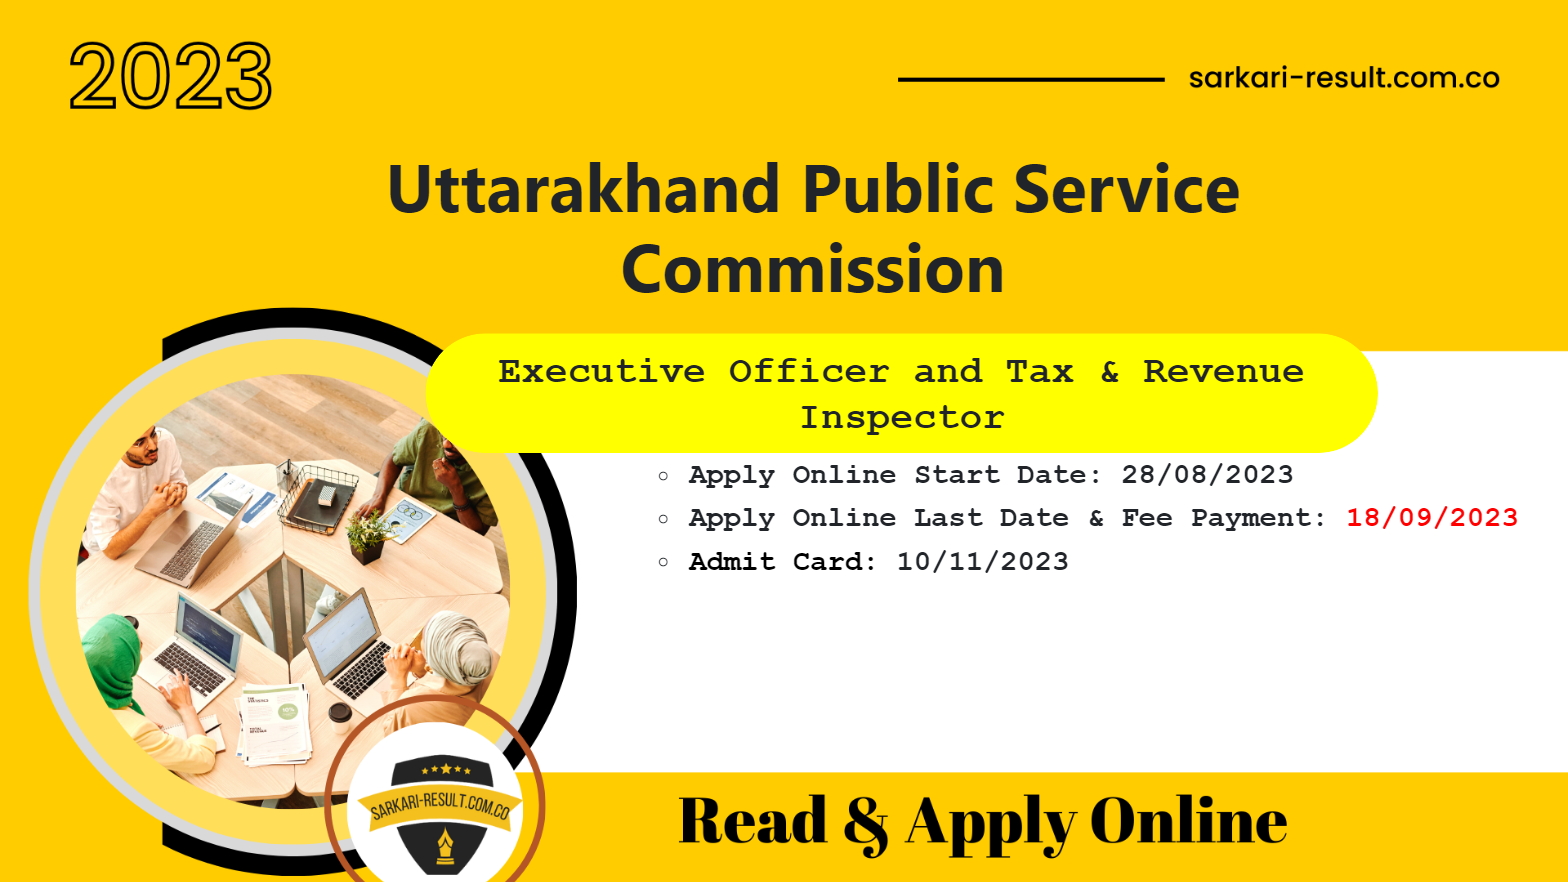 Apply Online UKPSC Uttarakhand Executive Officer and Tax & Revenue Inspector Examination 2023 for 85 Post